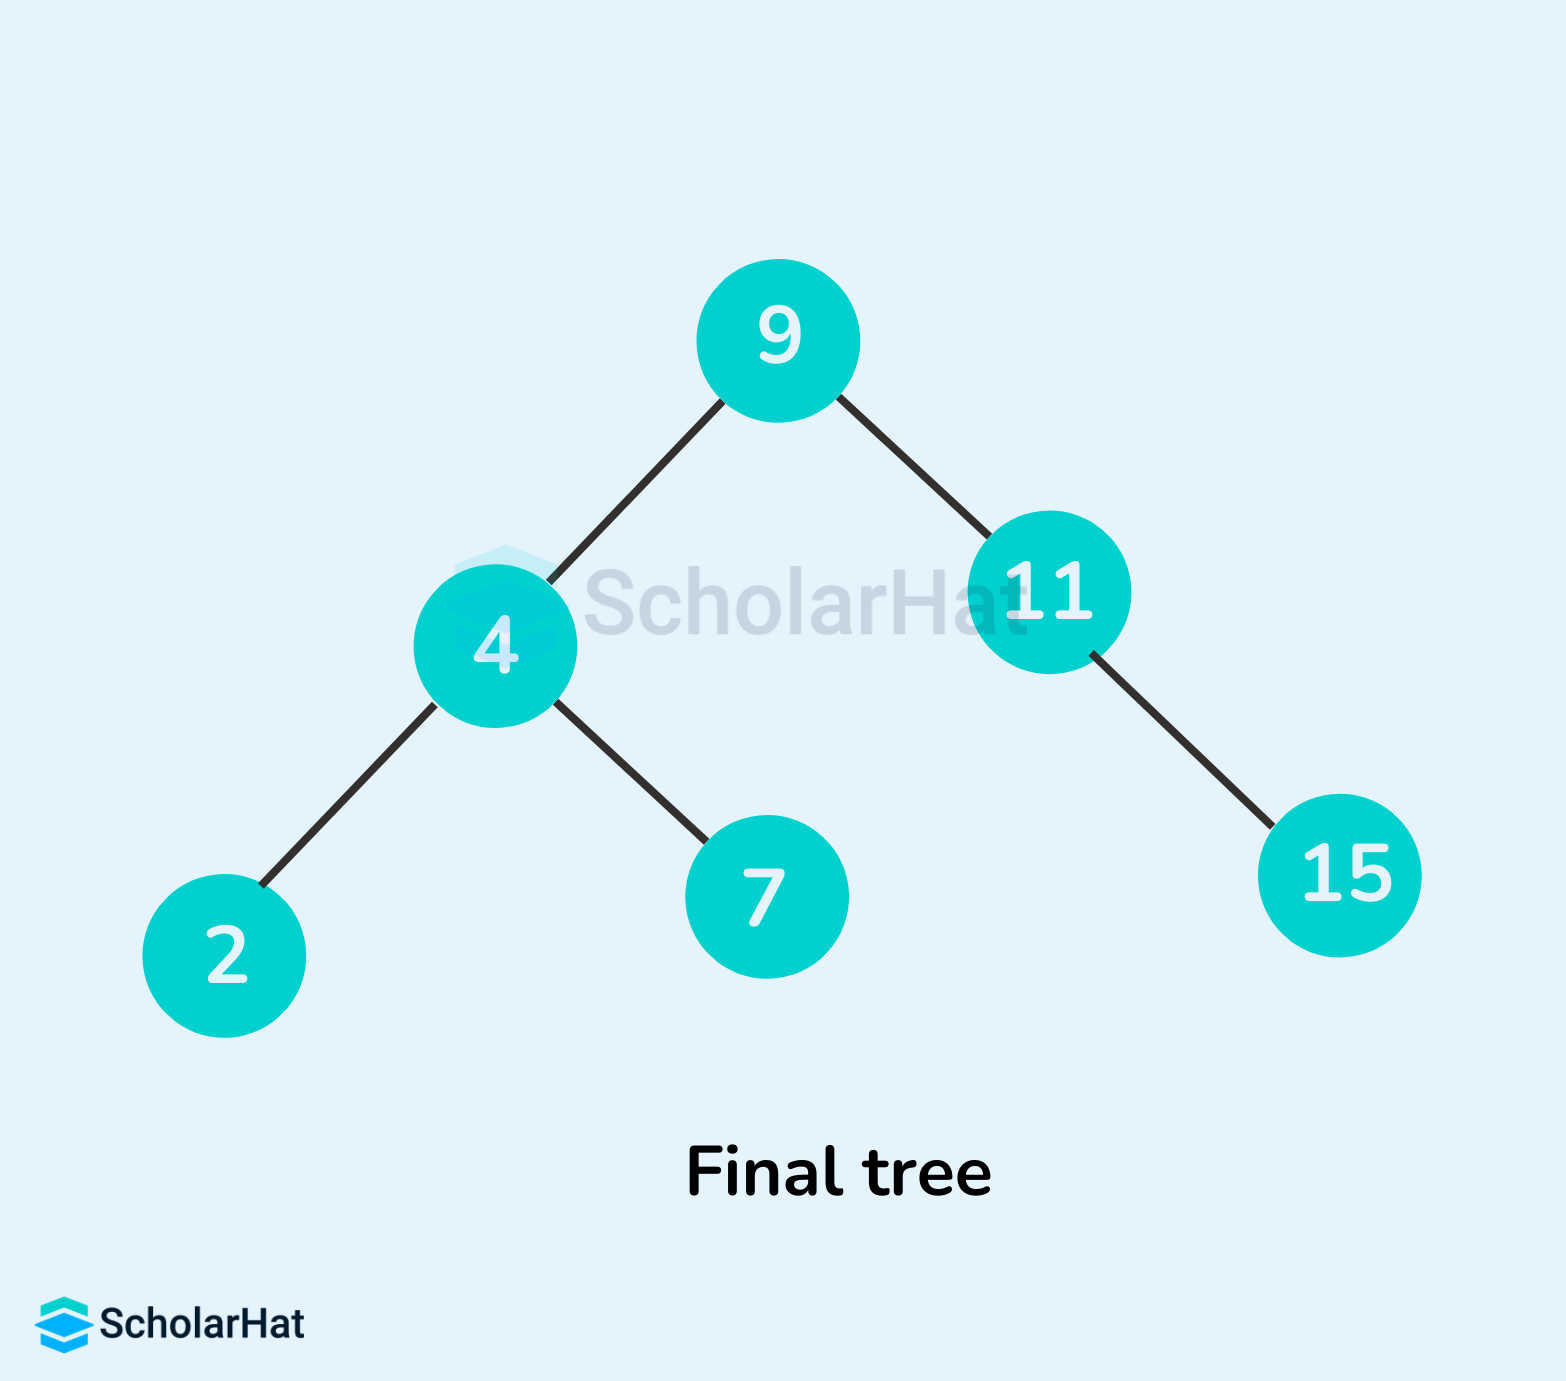 Final tree